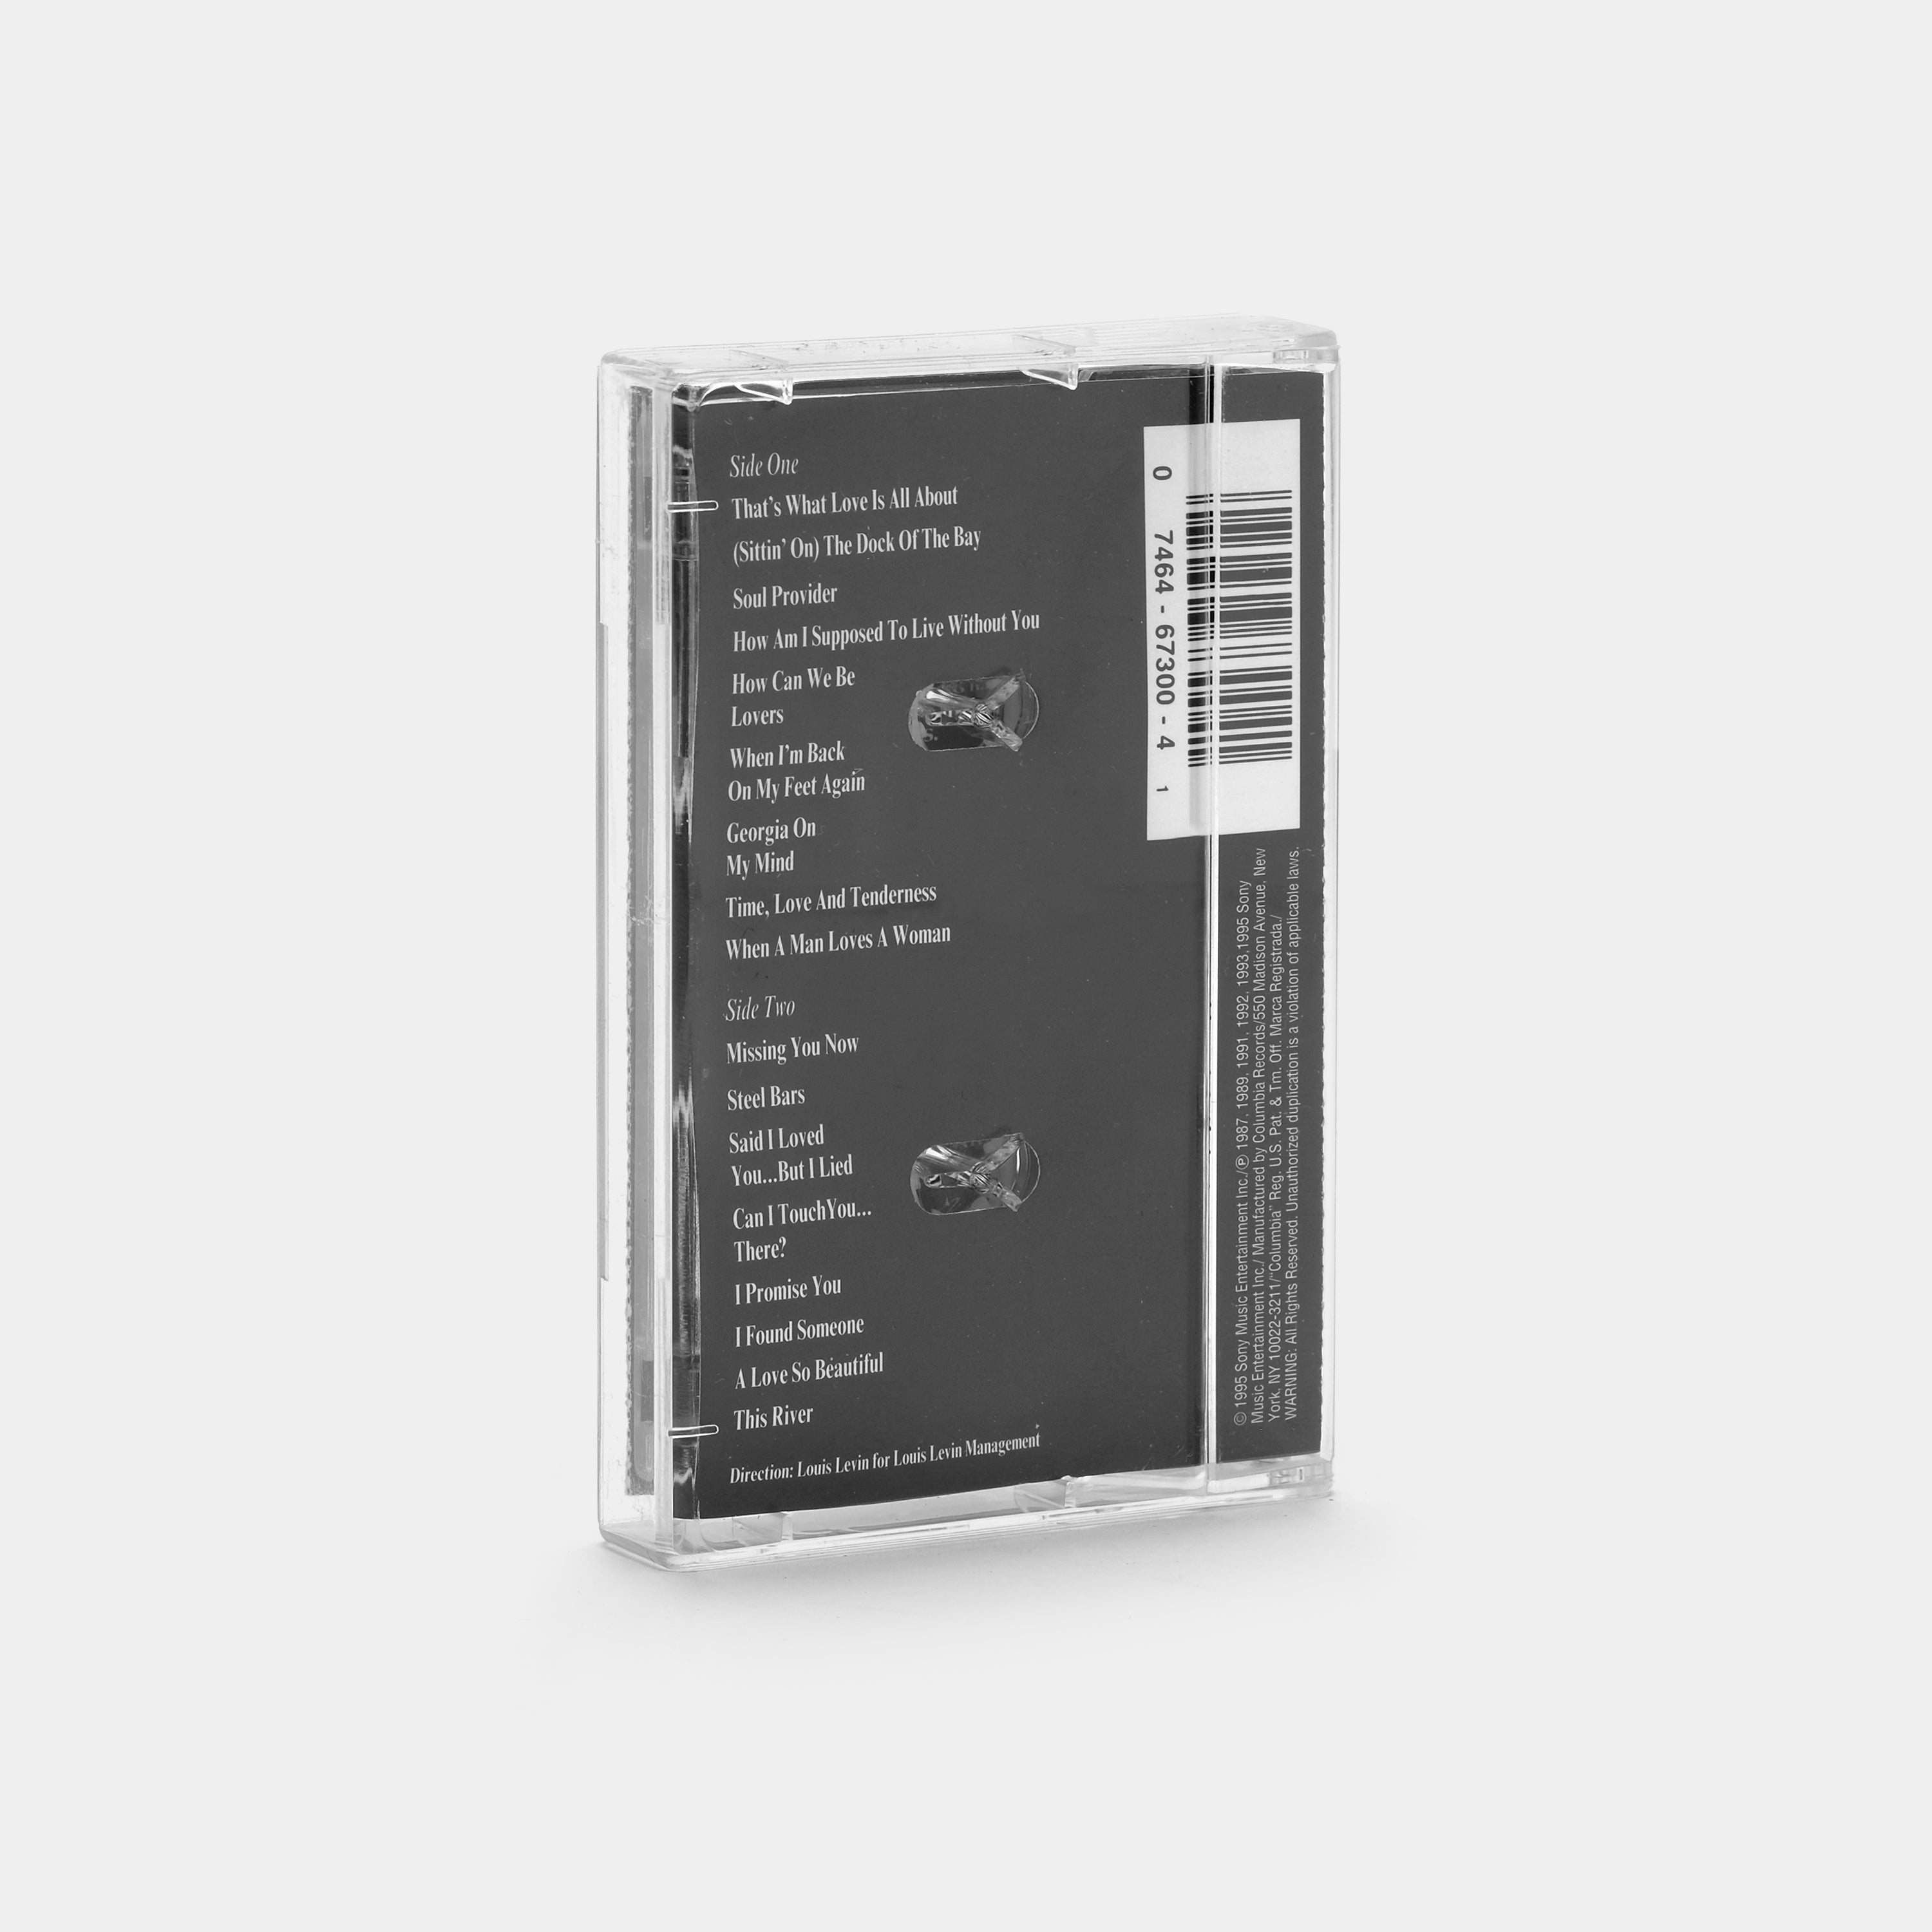 Michael Bolton - Greatest Hits 1985-1995 Cassette Tape